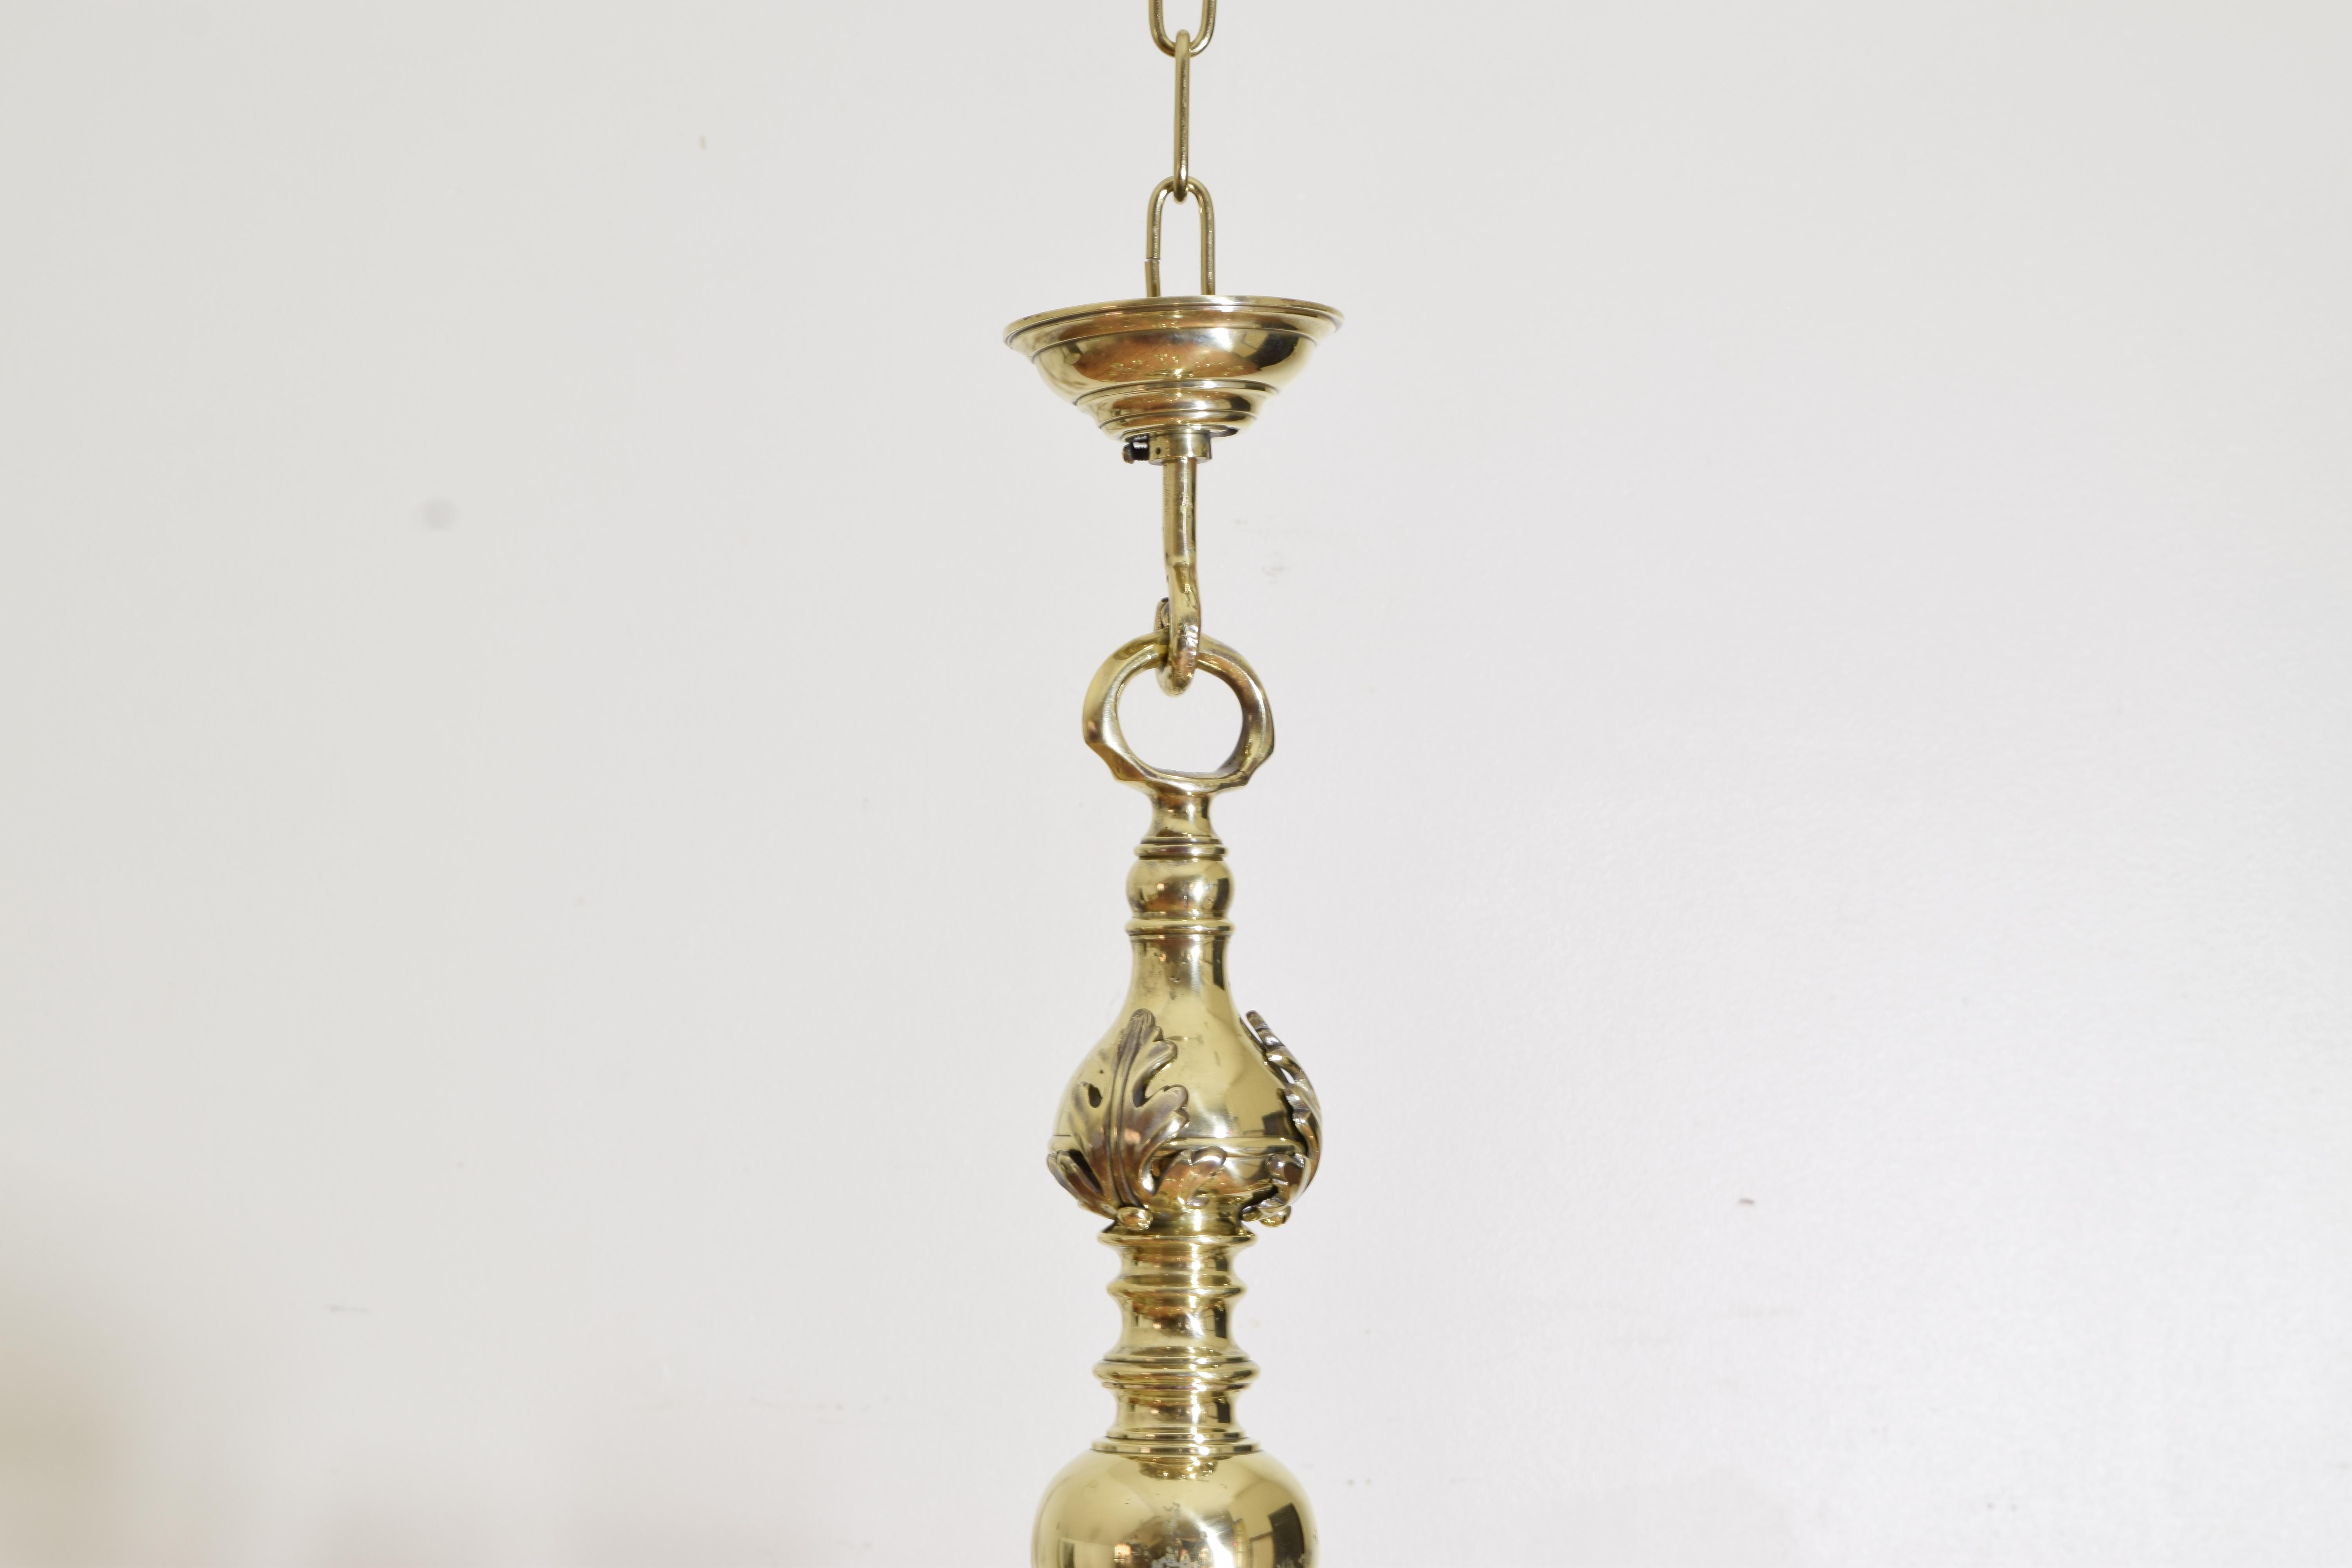 Exceptional Dutch Baroque Style 2-Tier 12 Light Brass Chandelier, 3rdq 19th cen. In Good Condition For Sale In Atlanta, GA